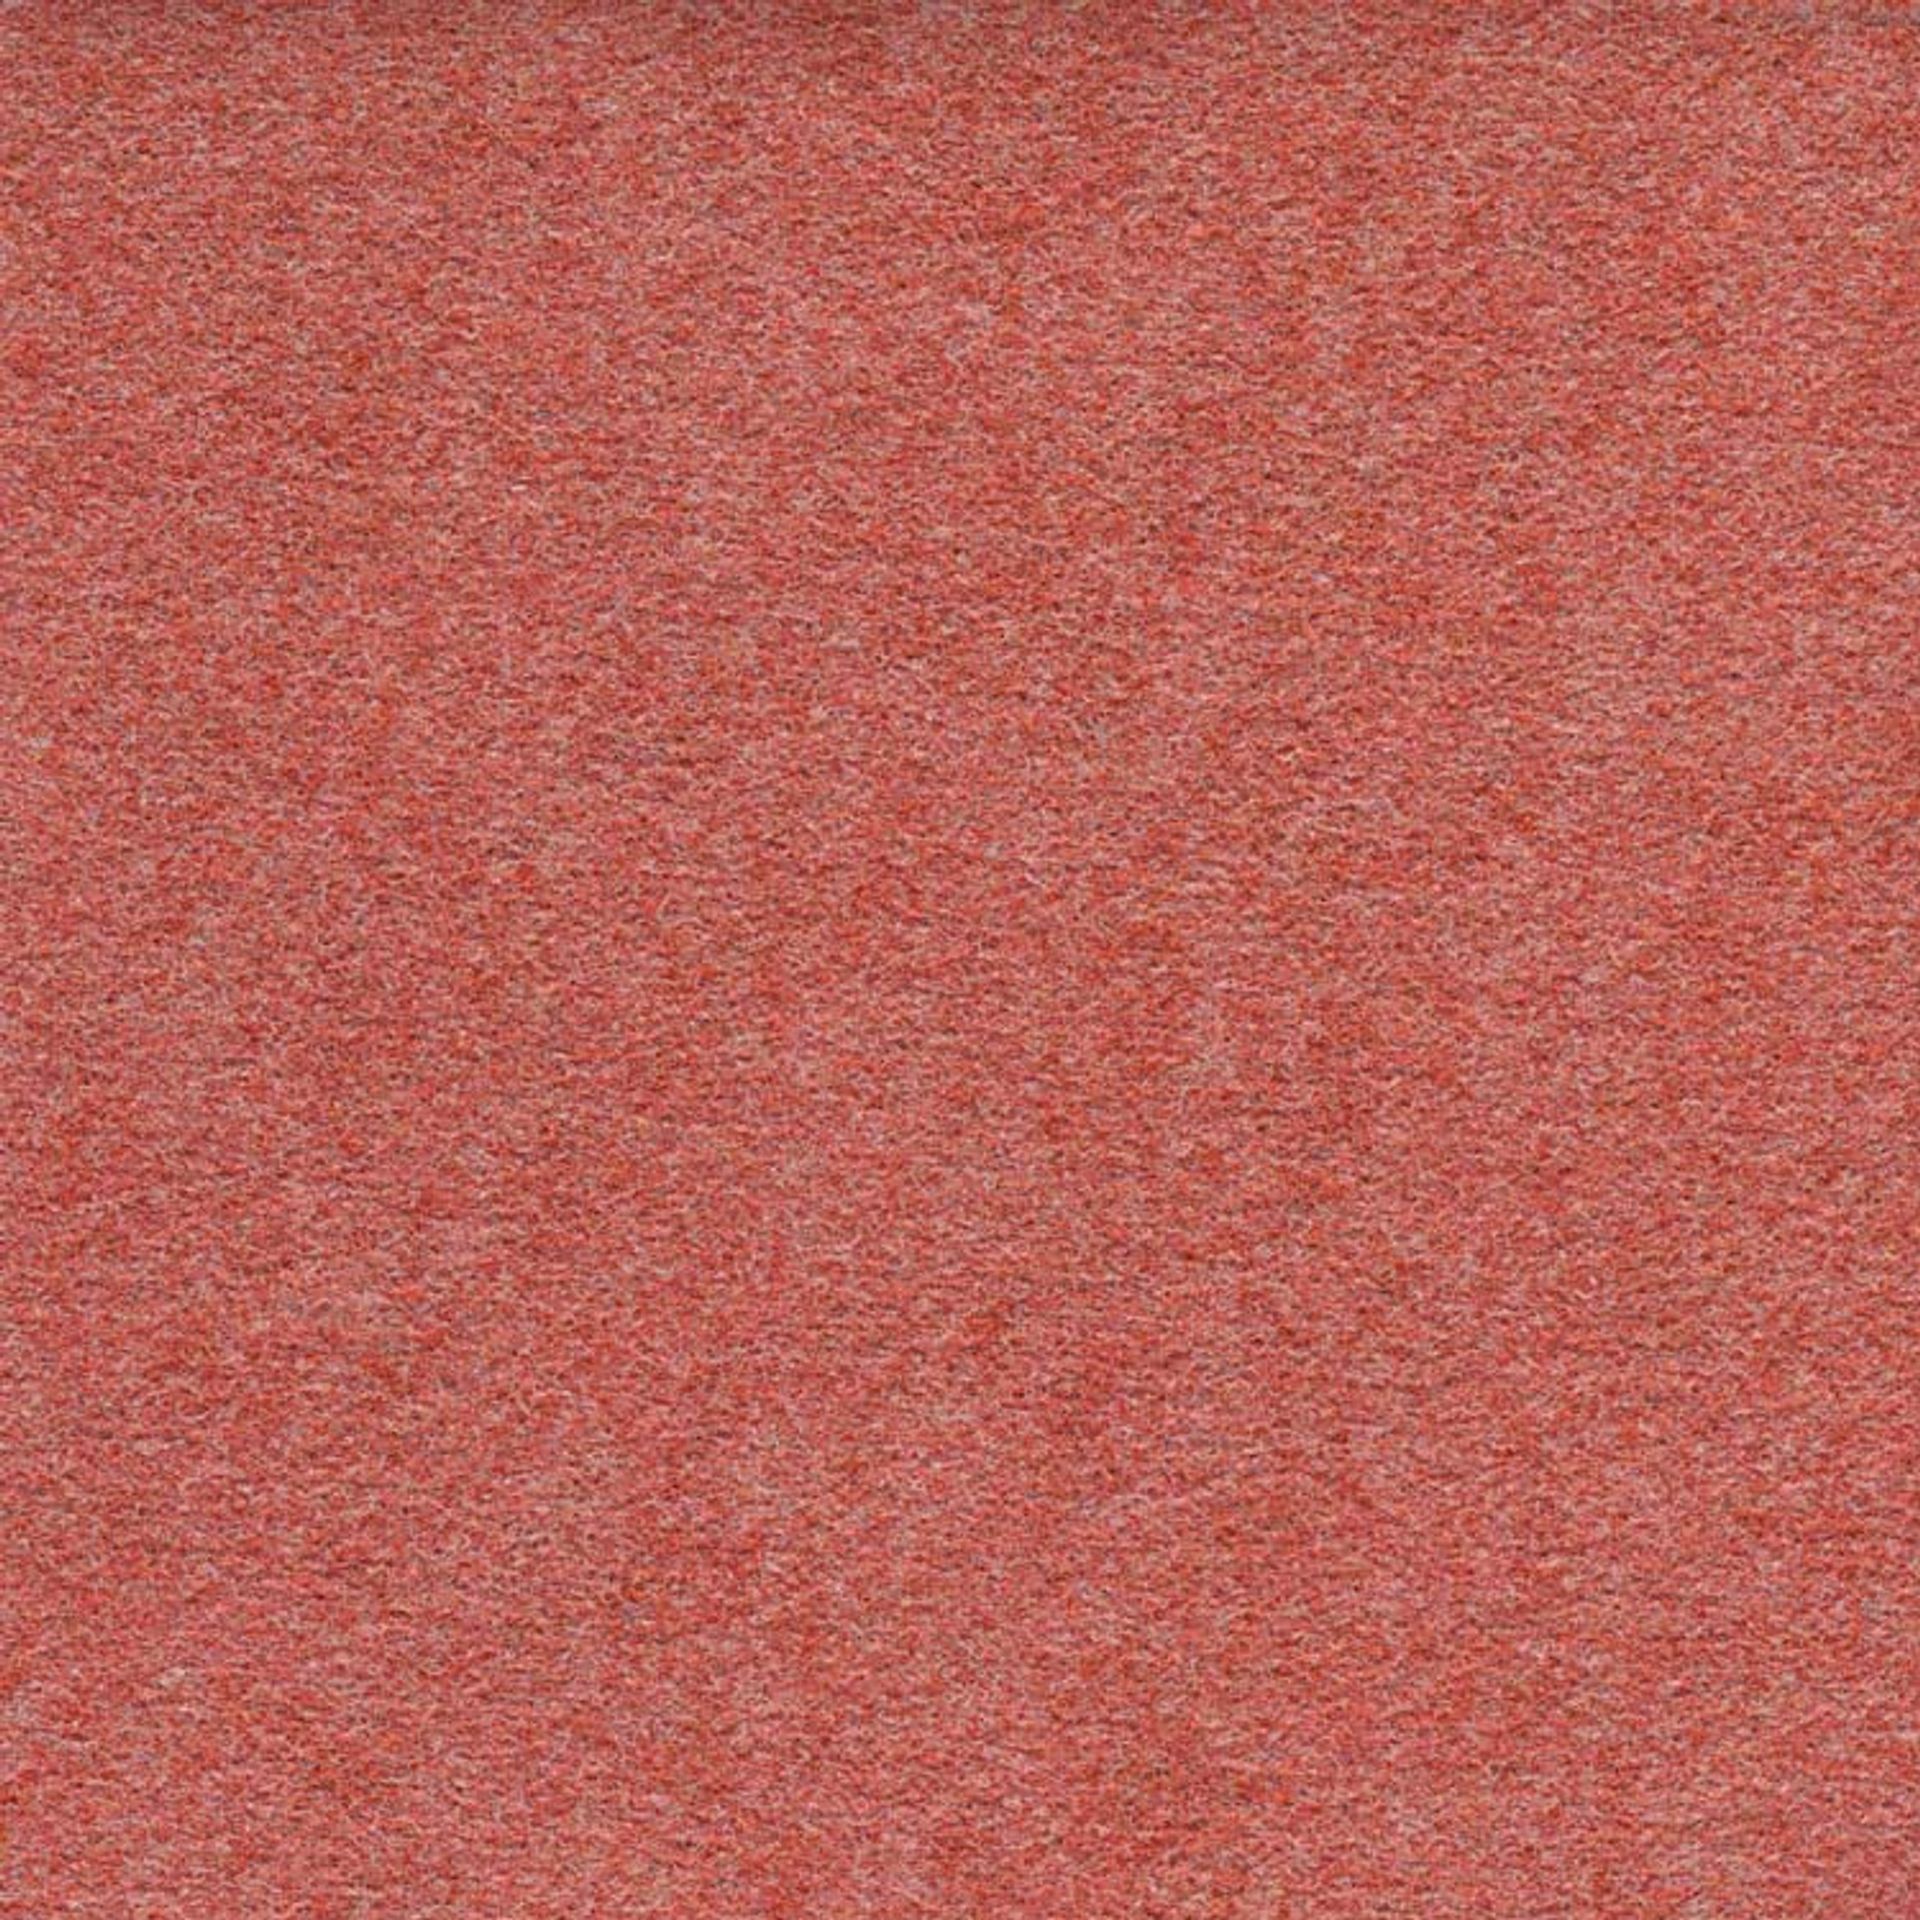 Teppichfliese 25 x 100 cm Nadelvlies FINETT DIMENSION farbige göße p509208 Lachs